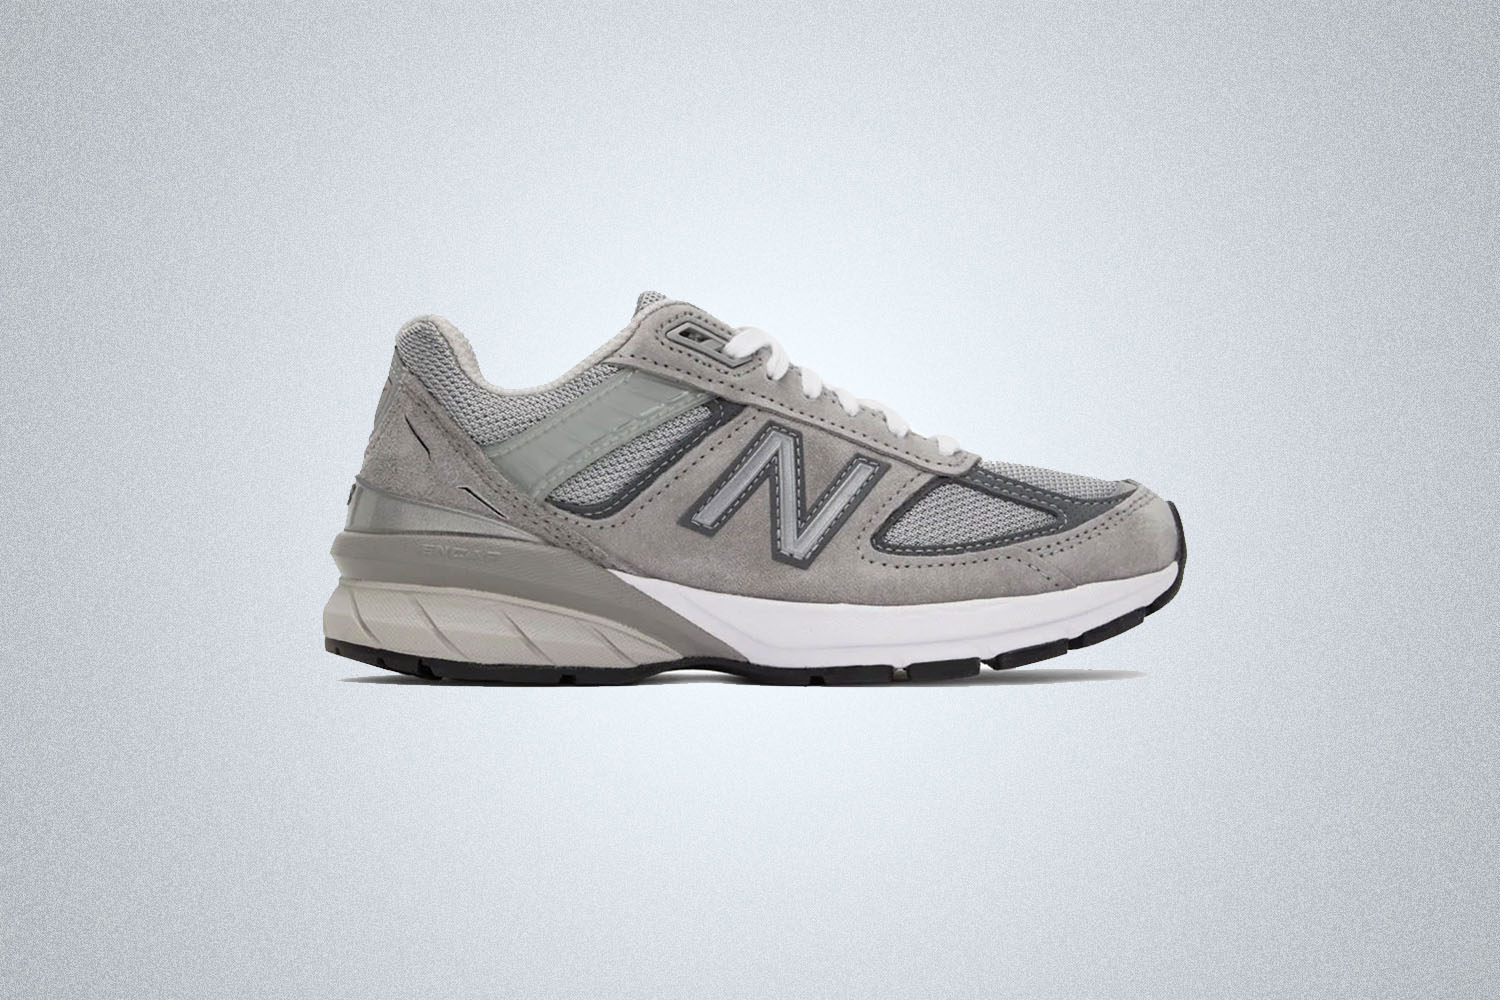 New Balance Made in USA 990 v5 Running Shoe